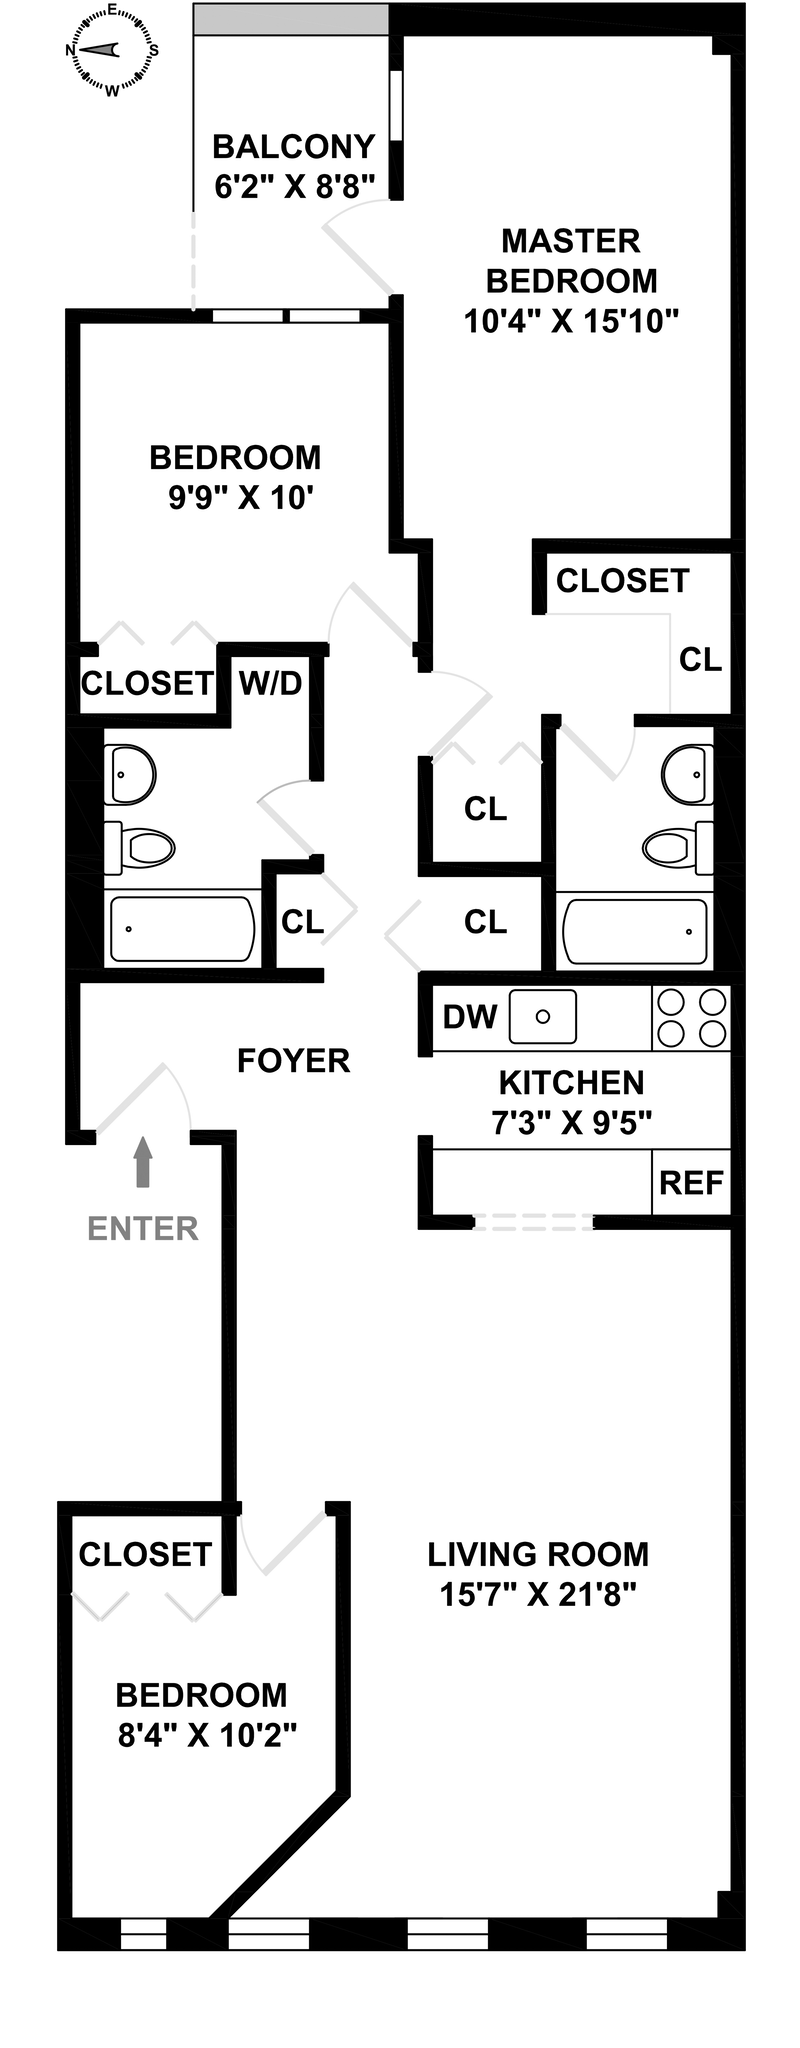 Floorplan for 100 Manhattan Avenue, 4B